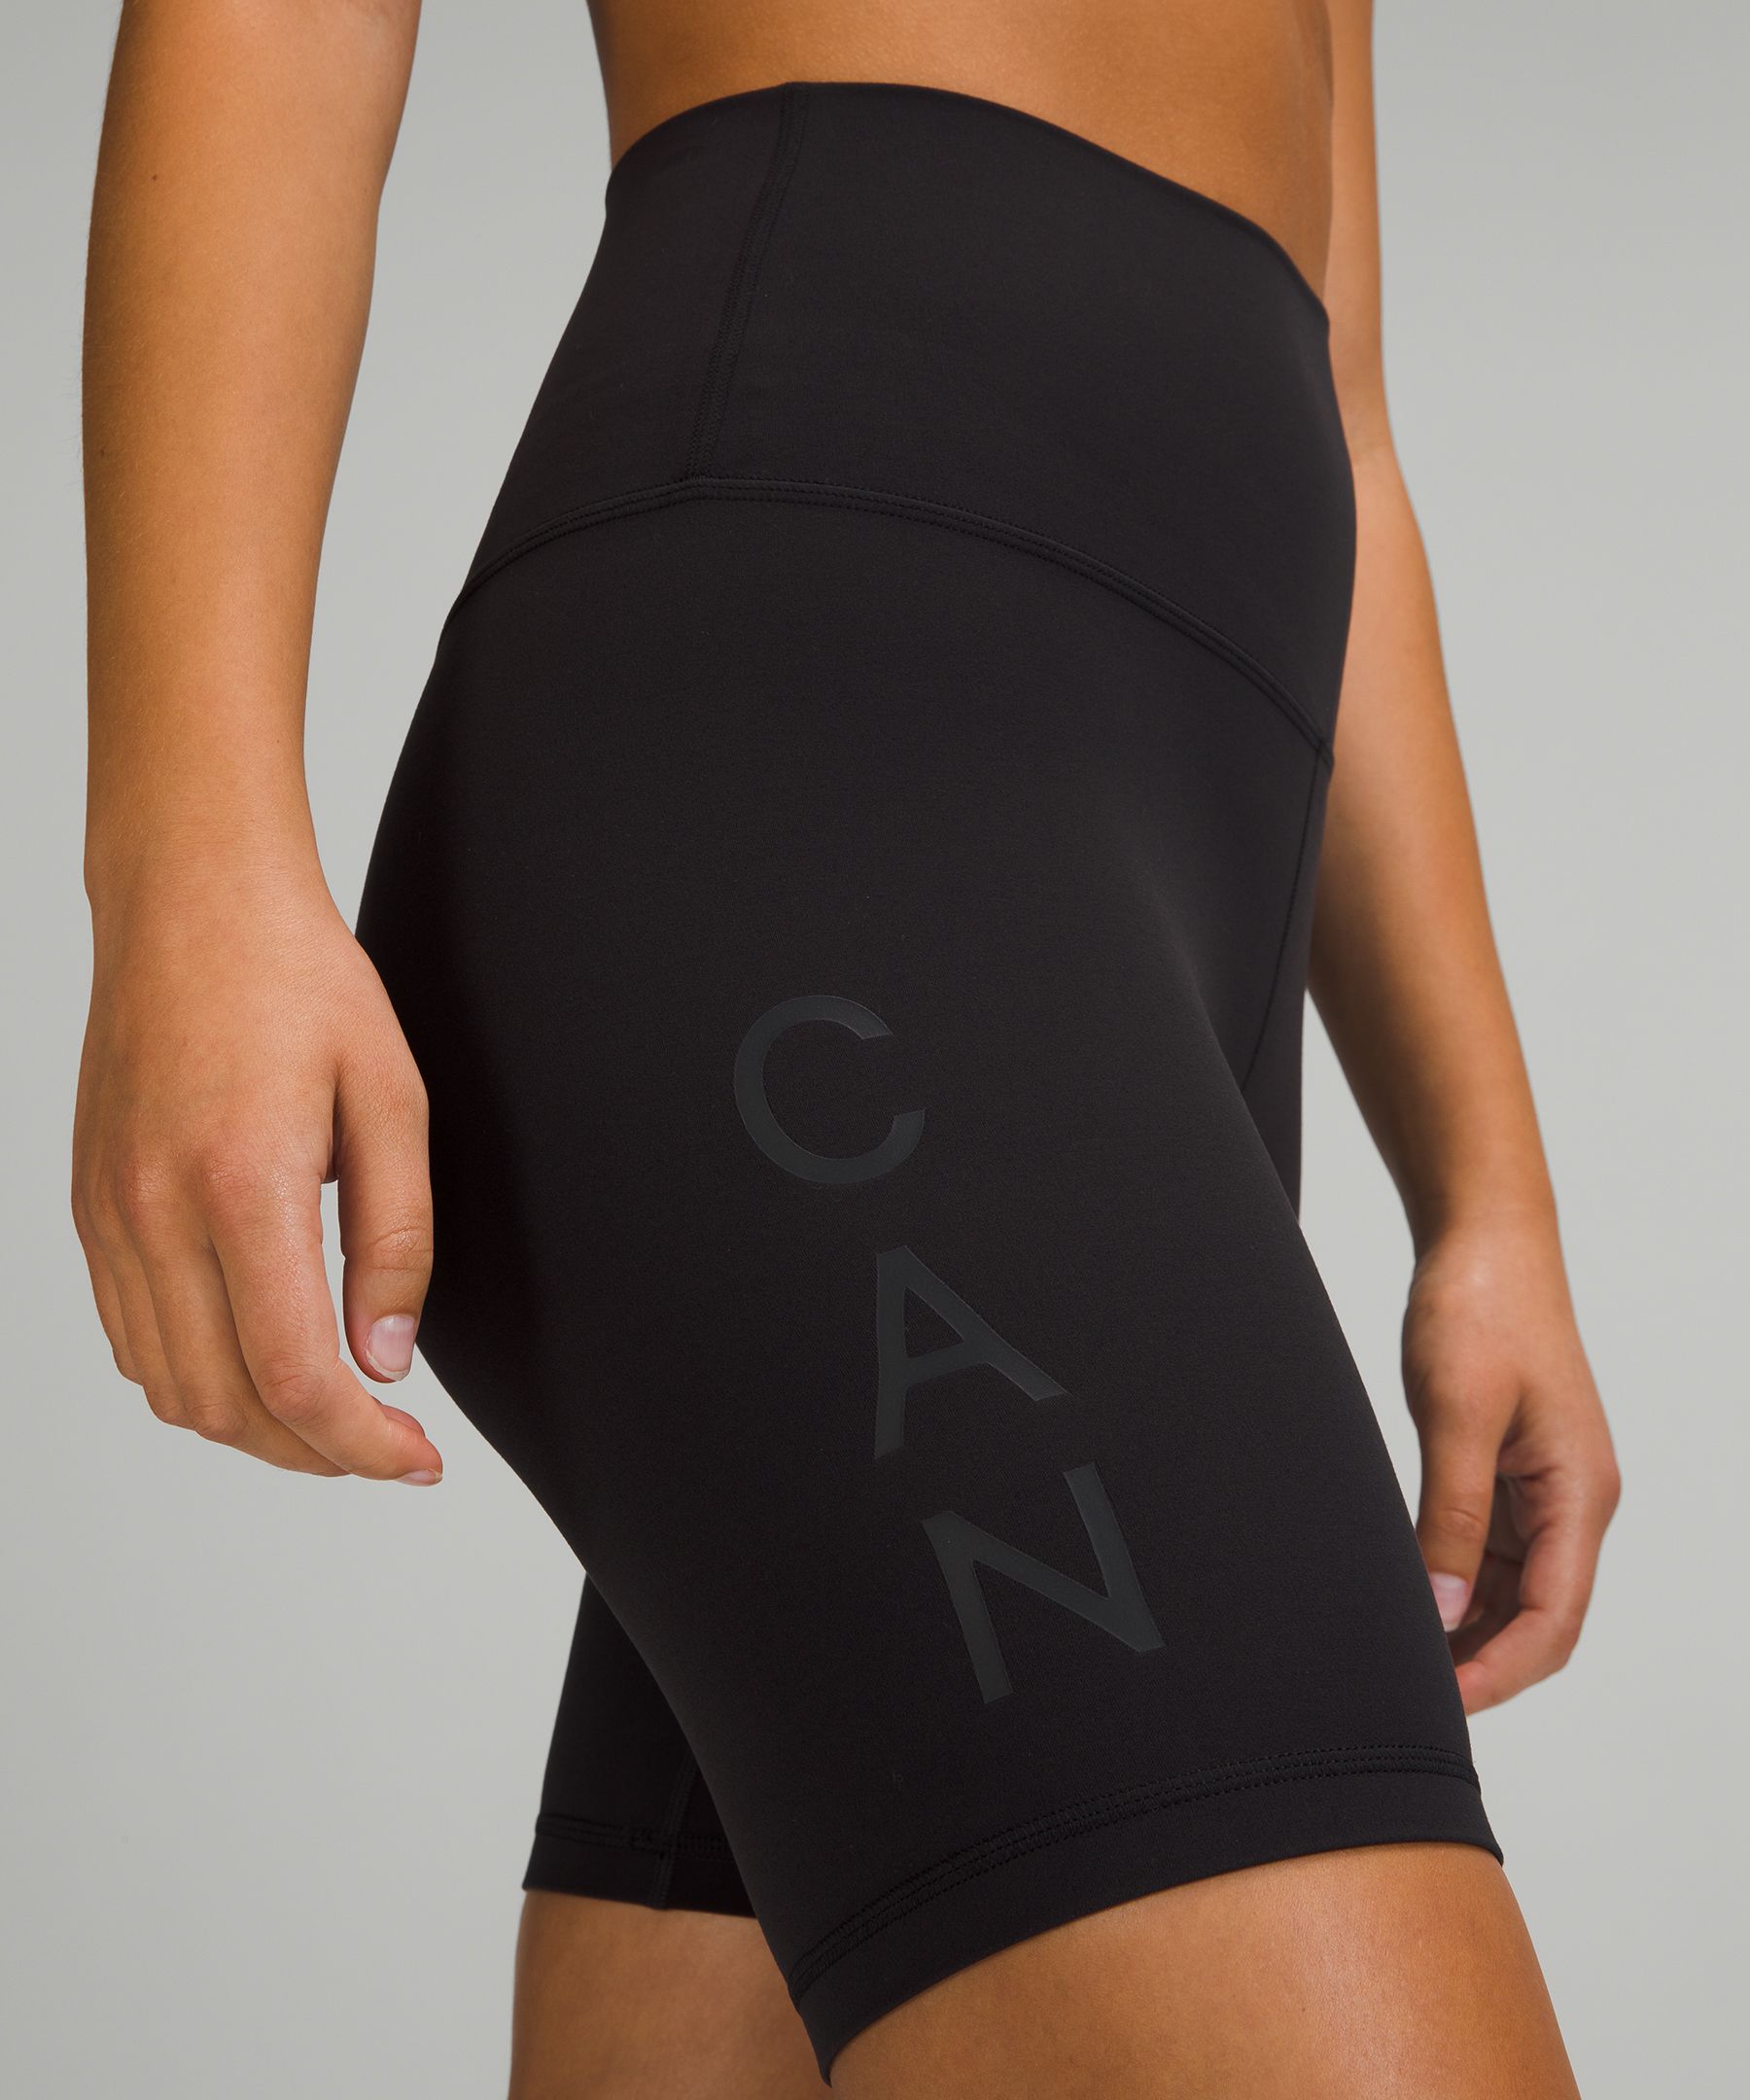 Team Canada lululemon Align™ High-Rise Short 8 *COC Logo, Women's Shorts